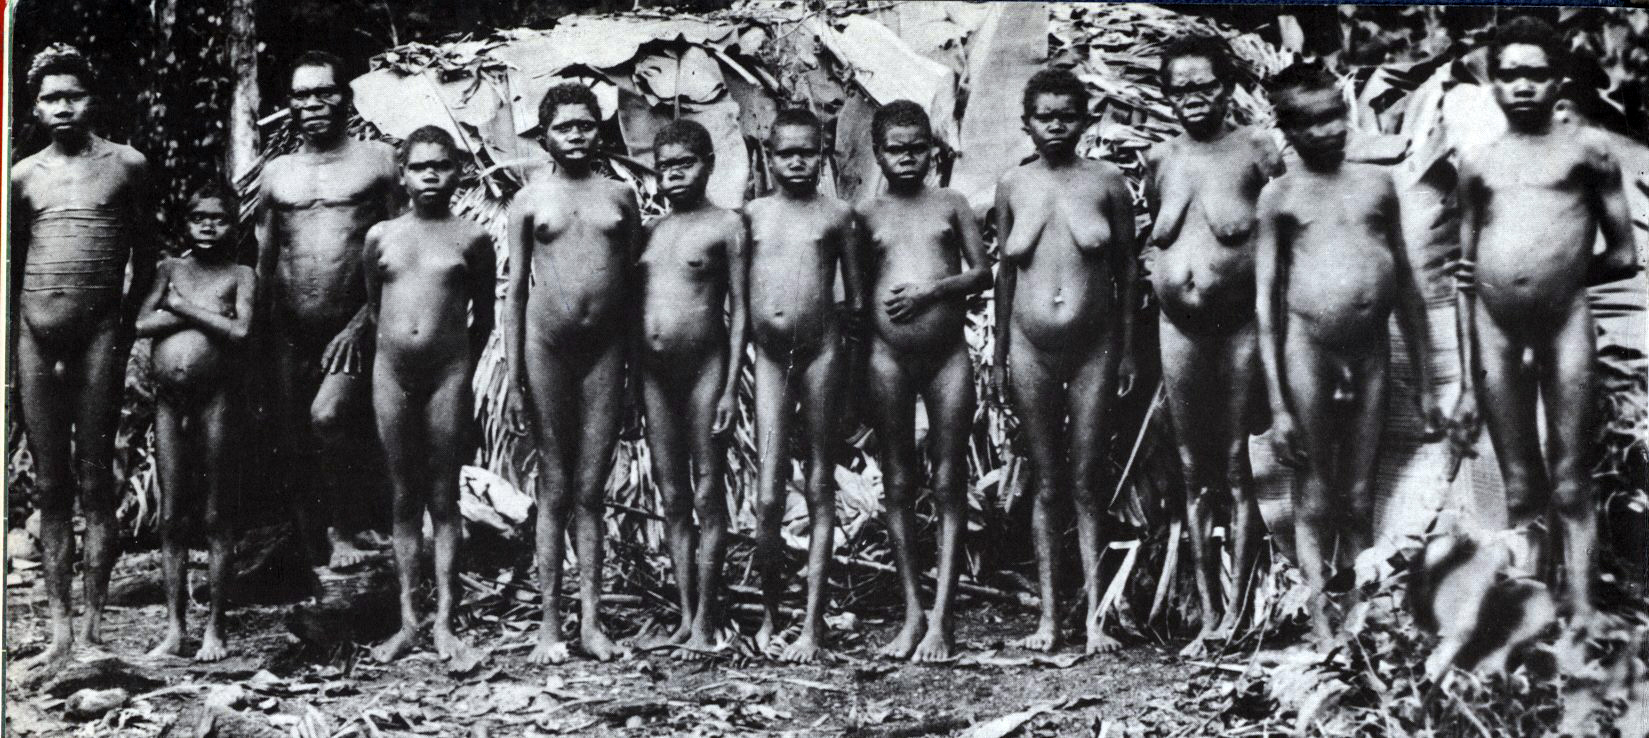 Australian aboriginal nude